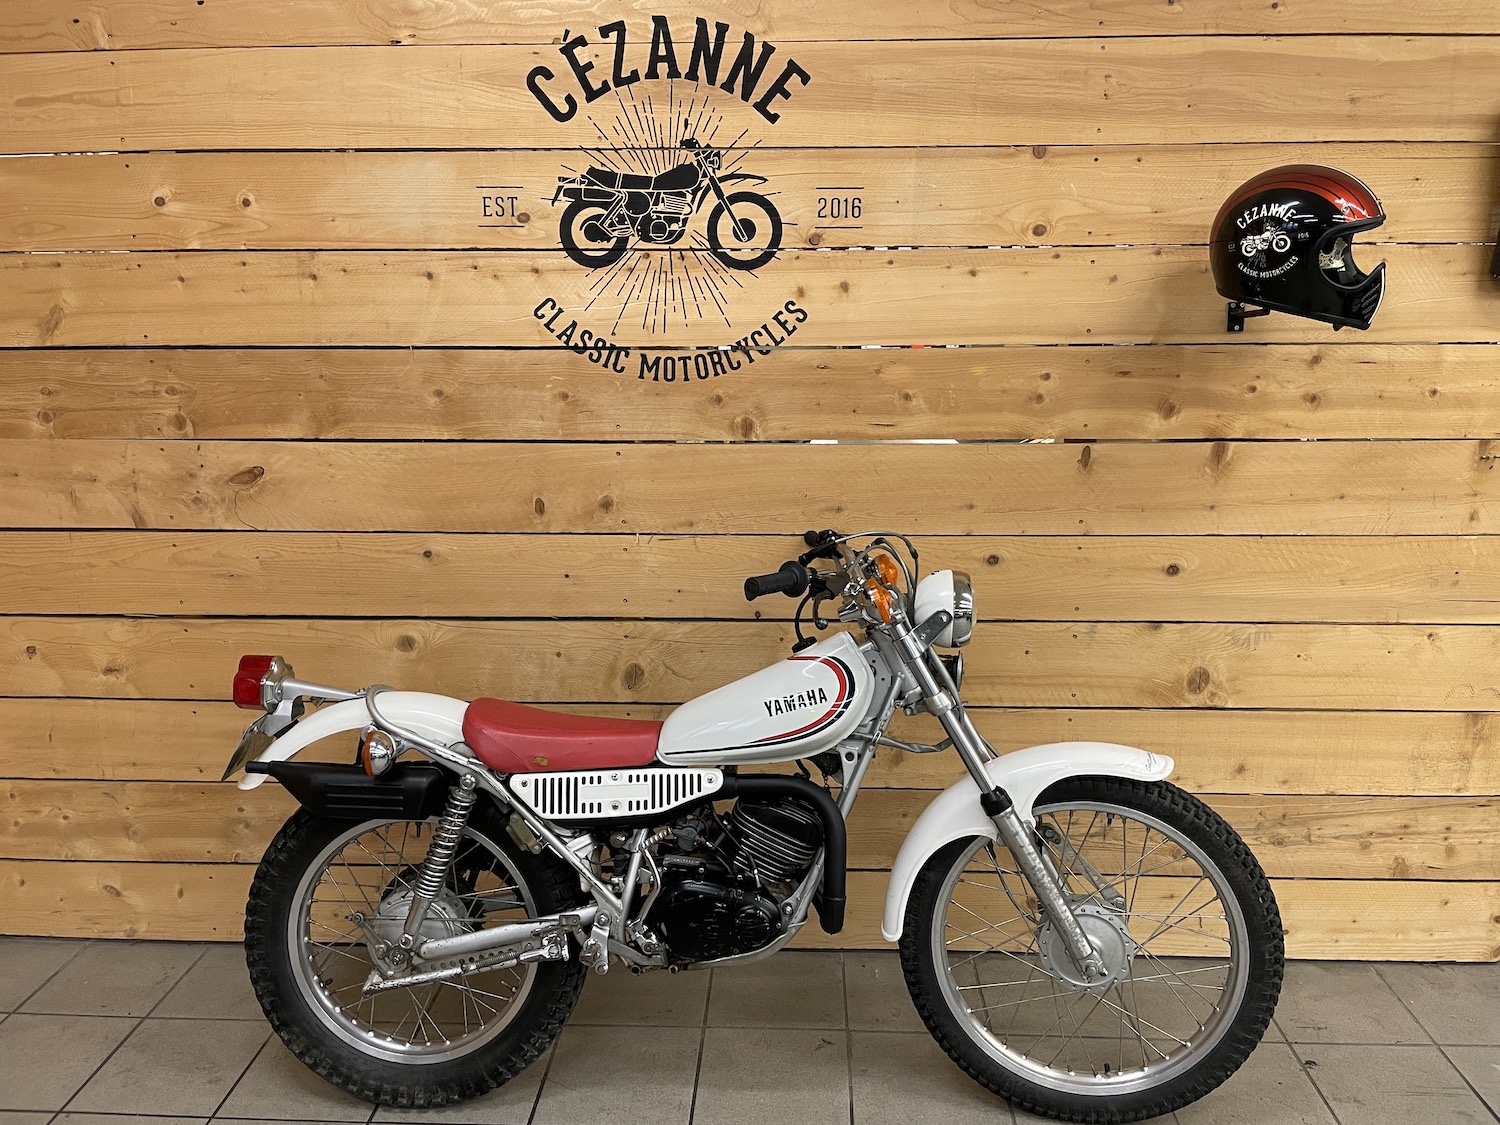 Yamaha_TY125_cezanne_classic_motorcycle_6-113.jpg